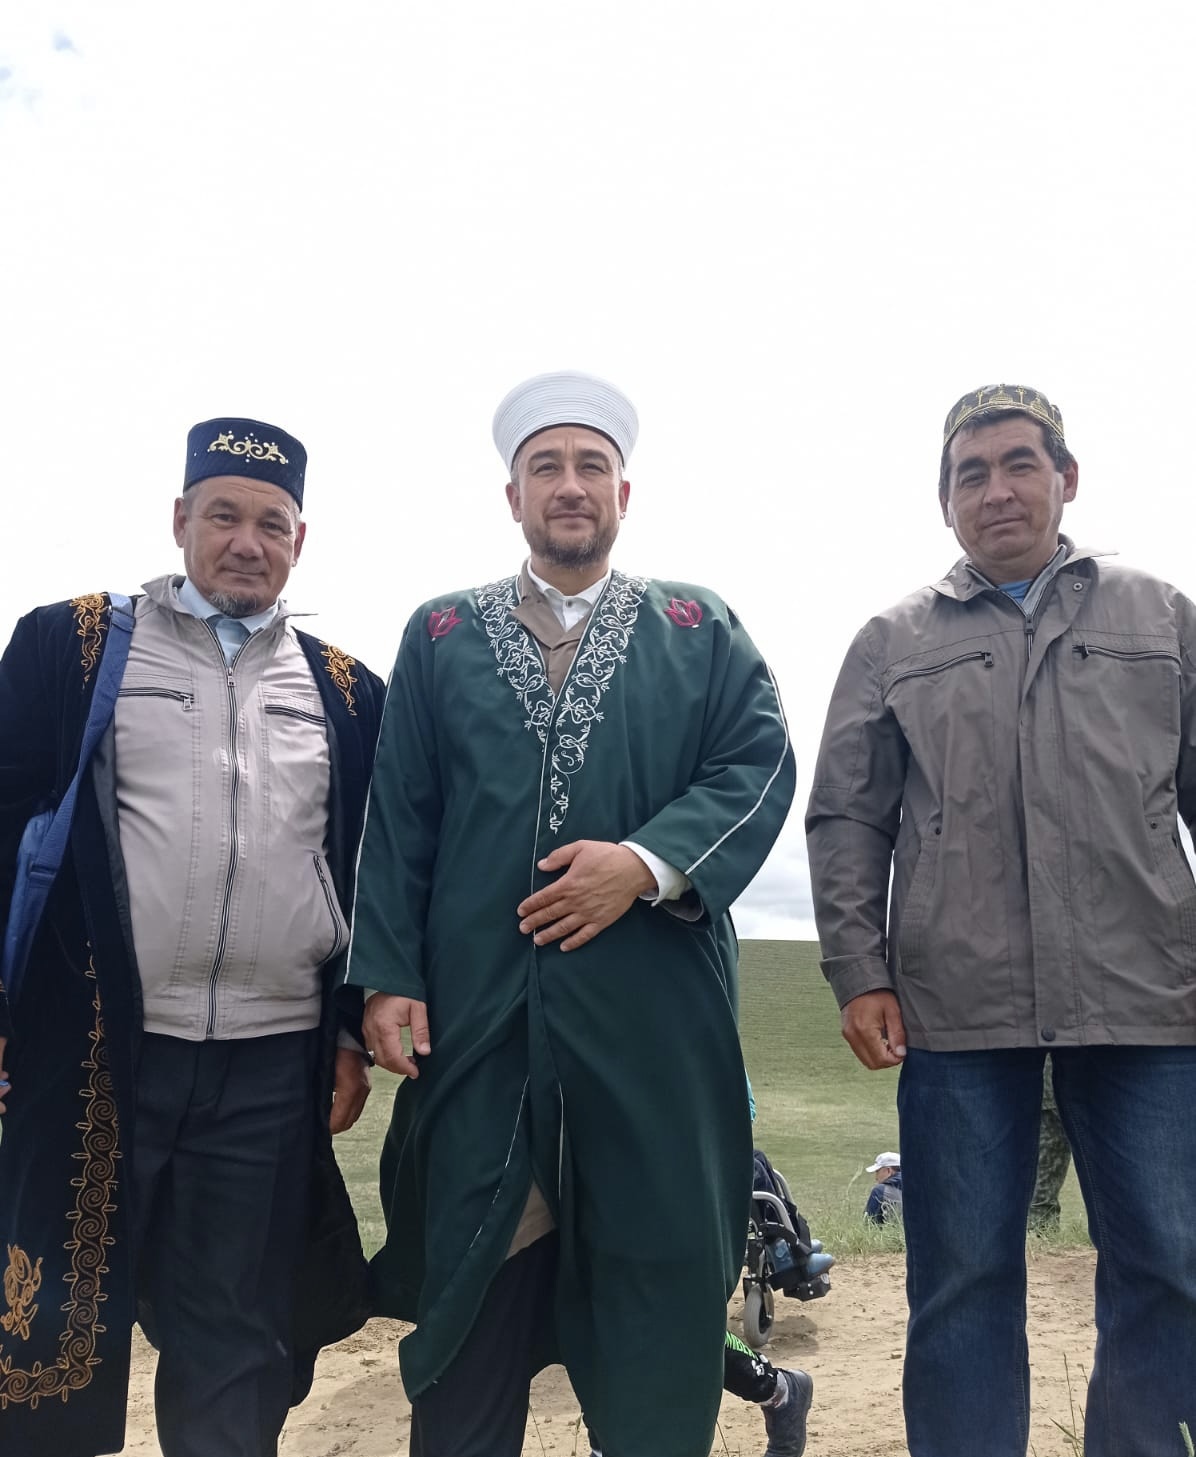 Собрание мусульман на горе Нарыстау